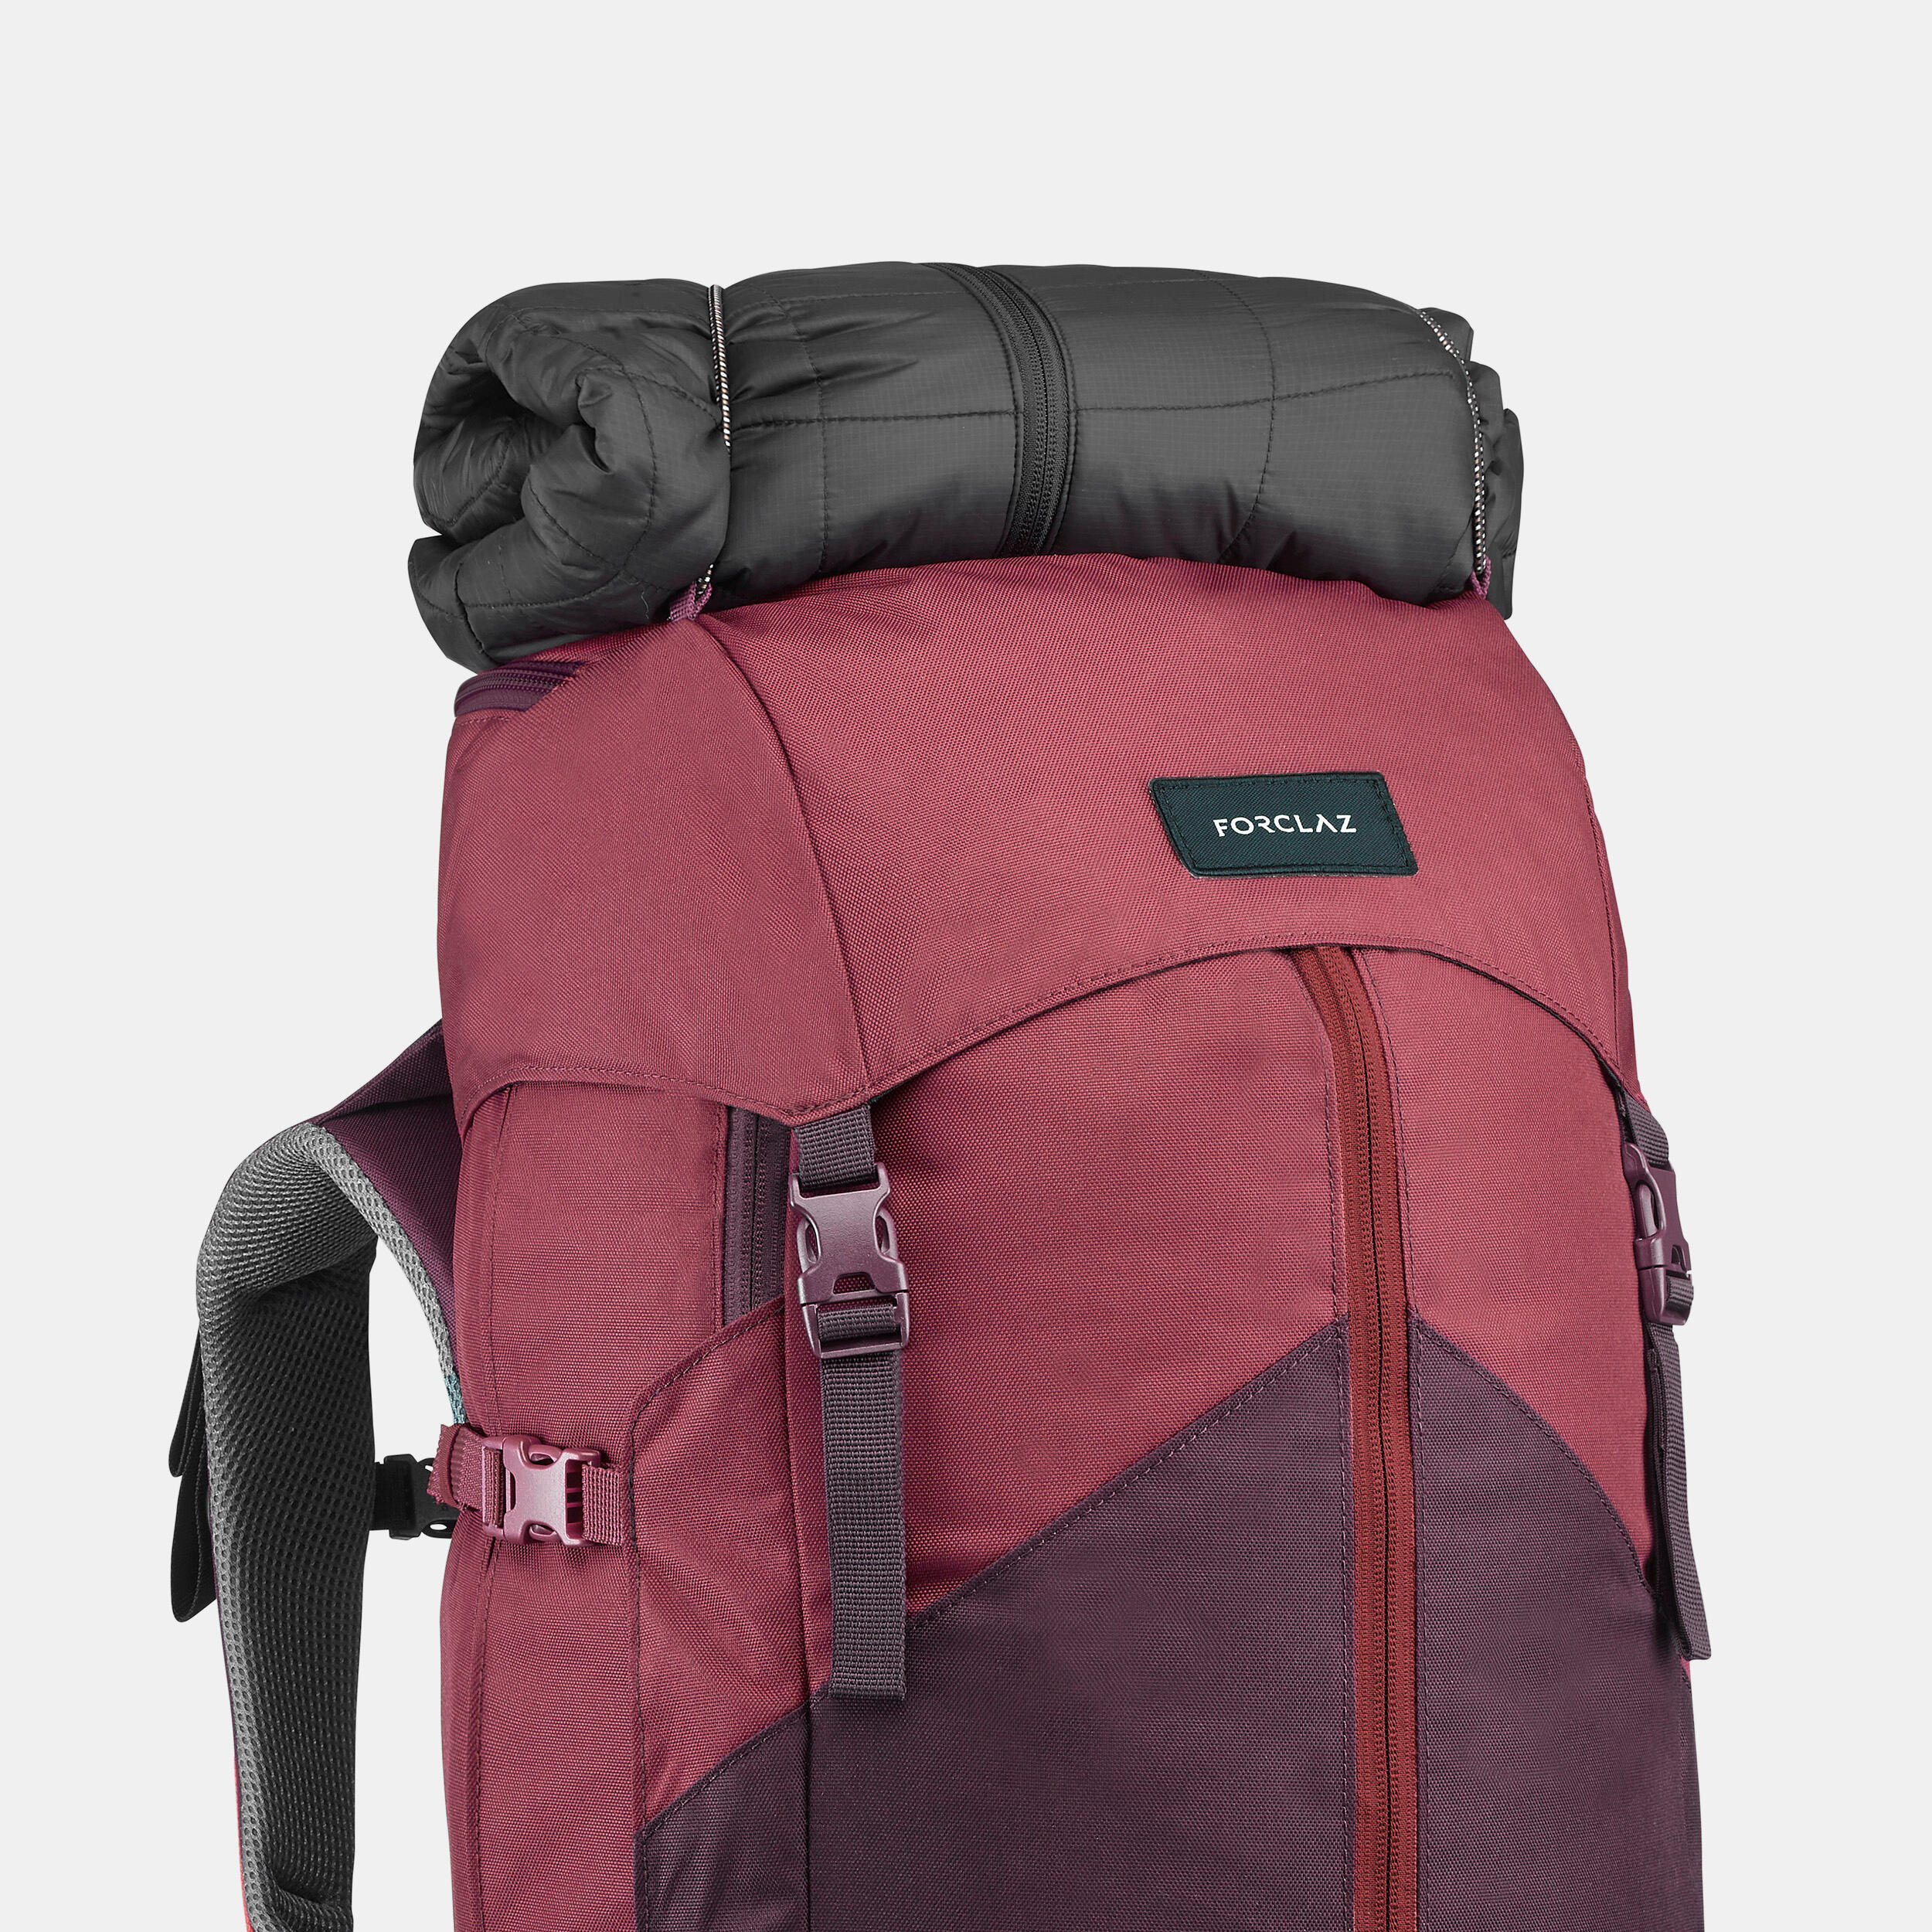 MT 100 Easyfit hiking backpack 60 L - Women - Blue-grey, Dark blue